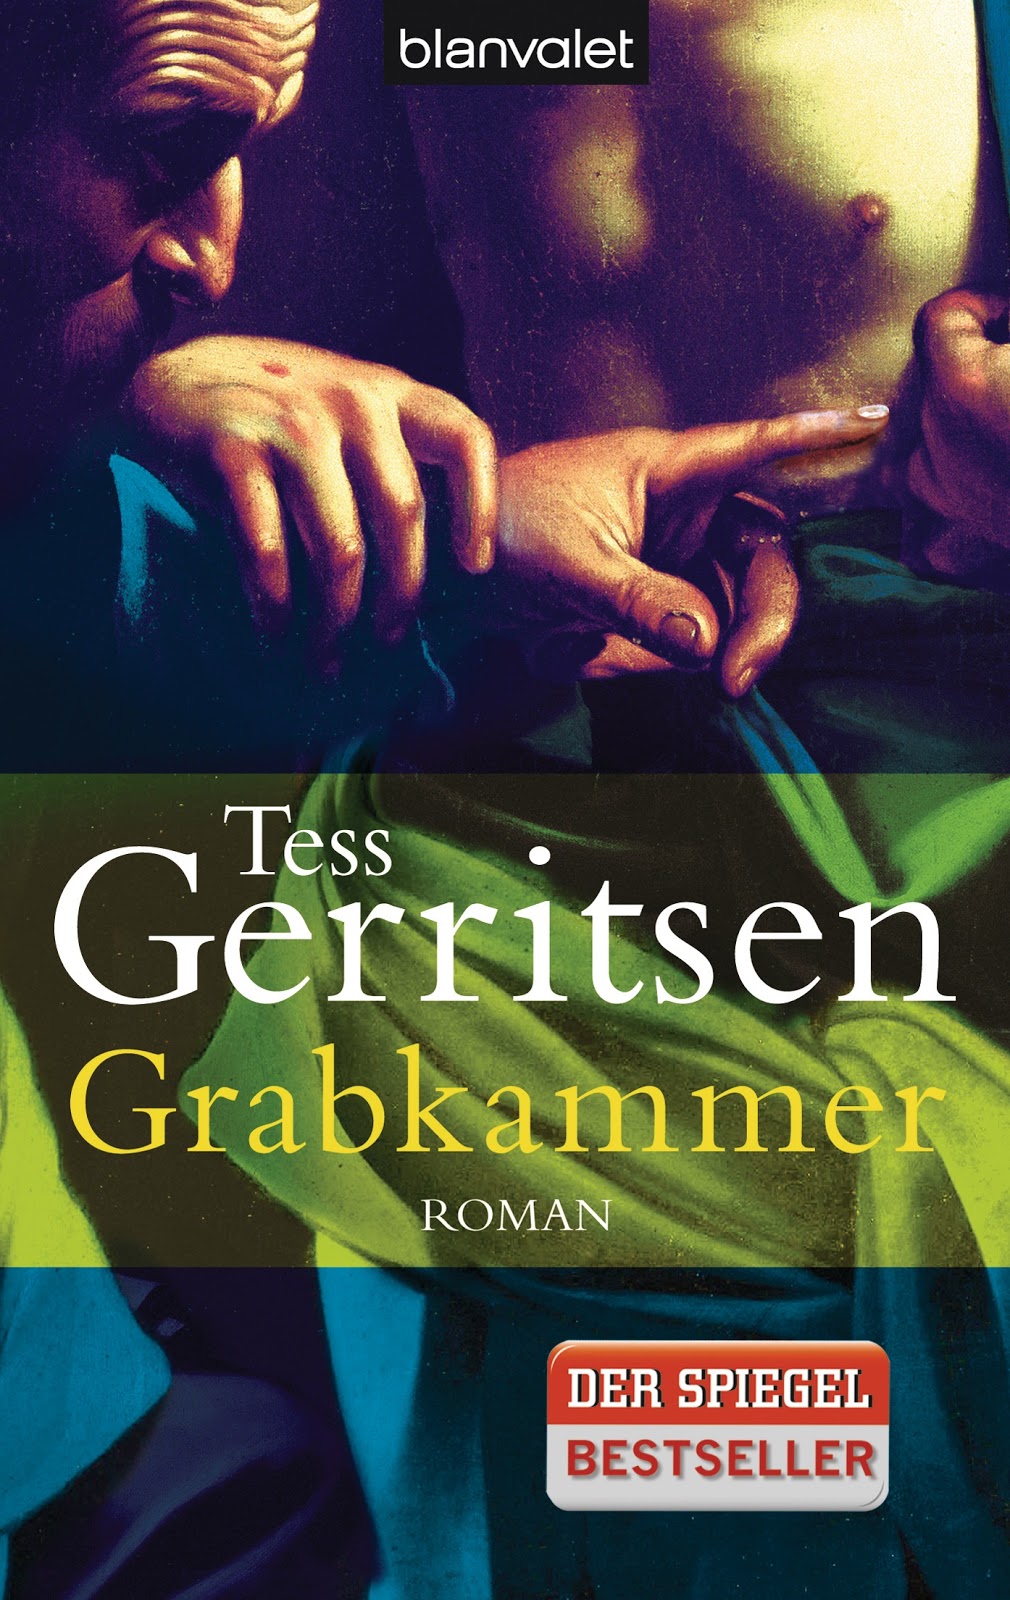 http://www.randomhouse.de/Presse/Taschenbuch/Grabkammer-Roman/Tess-Gerritsen/pr275606.rhd?men=1&pub=1000